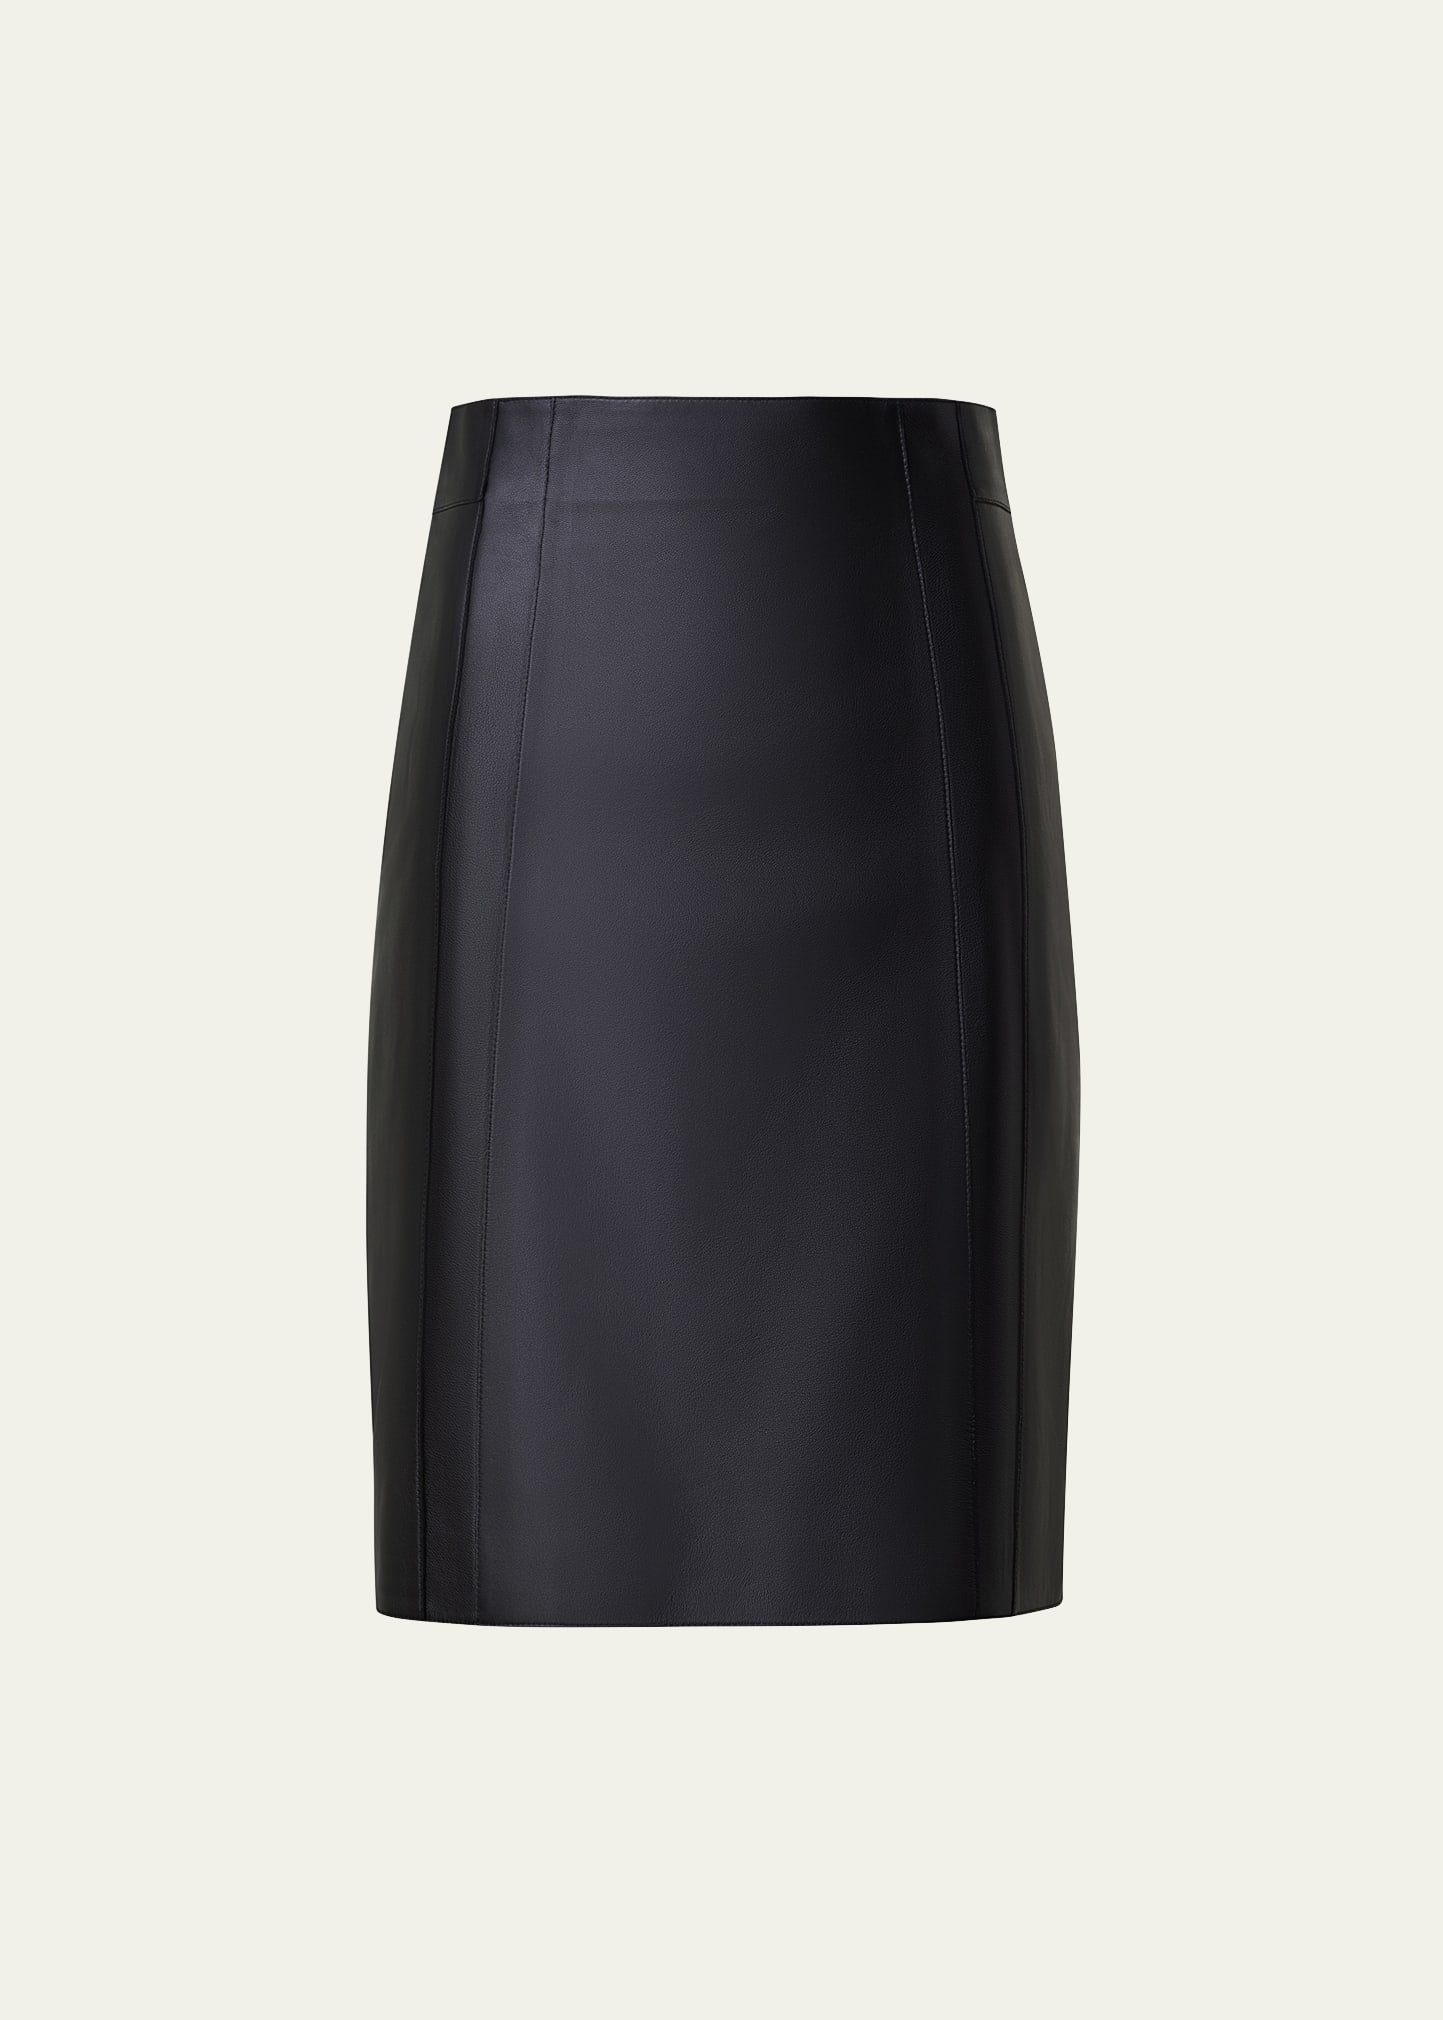 Lambskin Leather Short Pencil Skirt